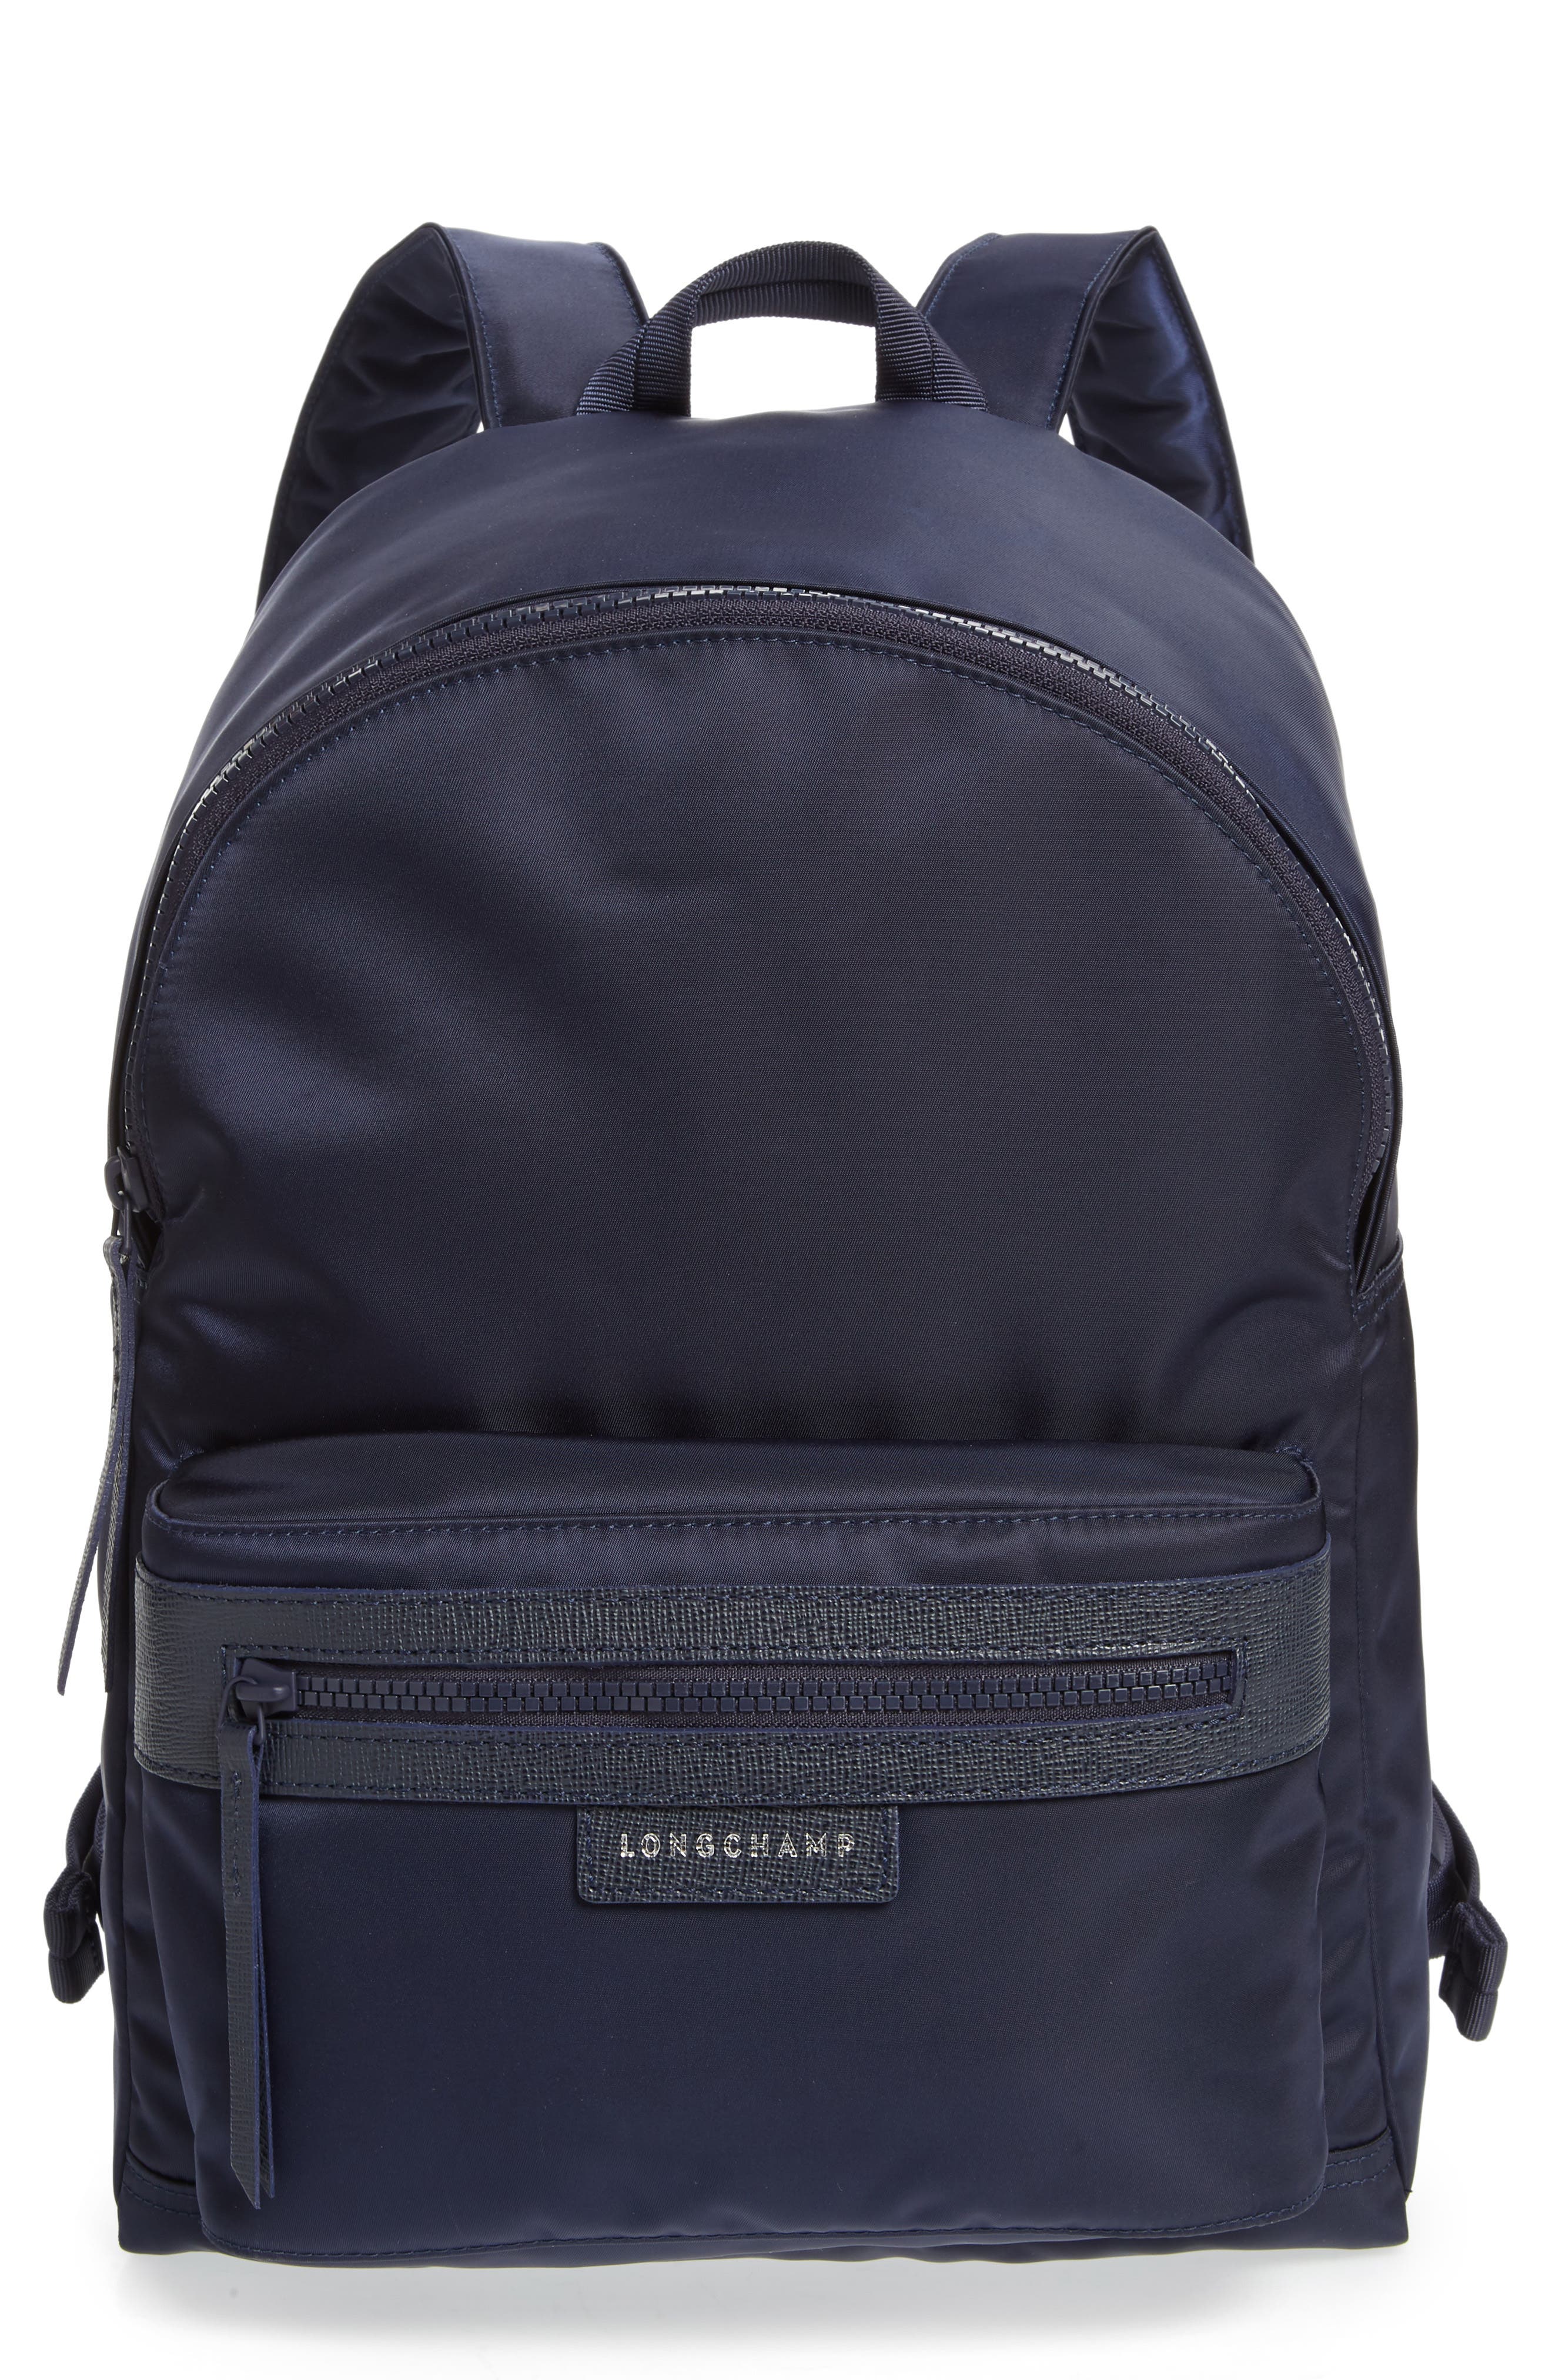 longchamp backpack nordstrom